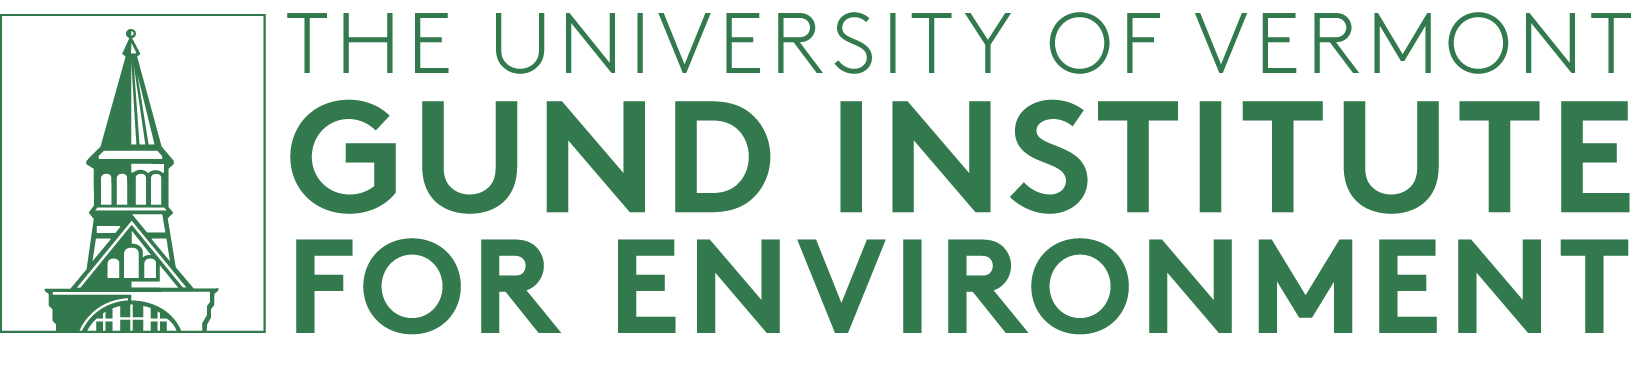 The University of Vermont Gund Institute for Environment logo